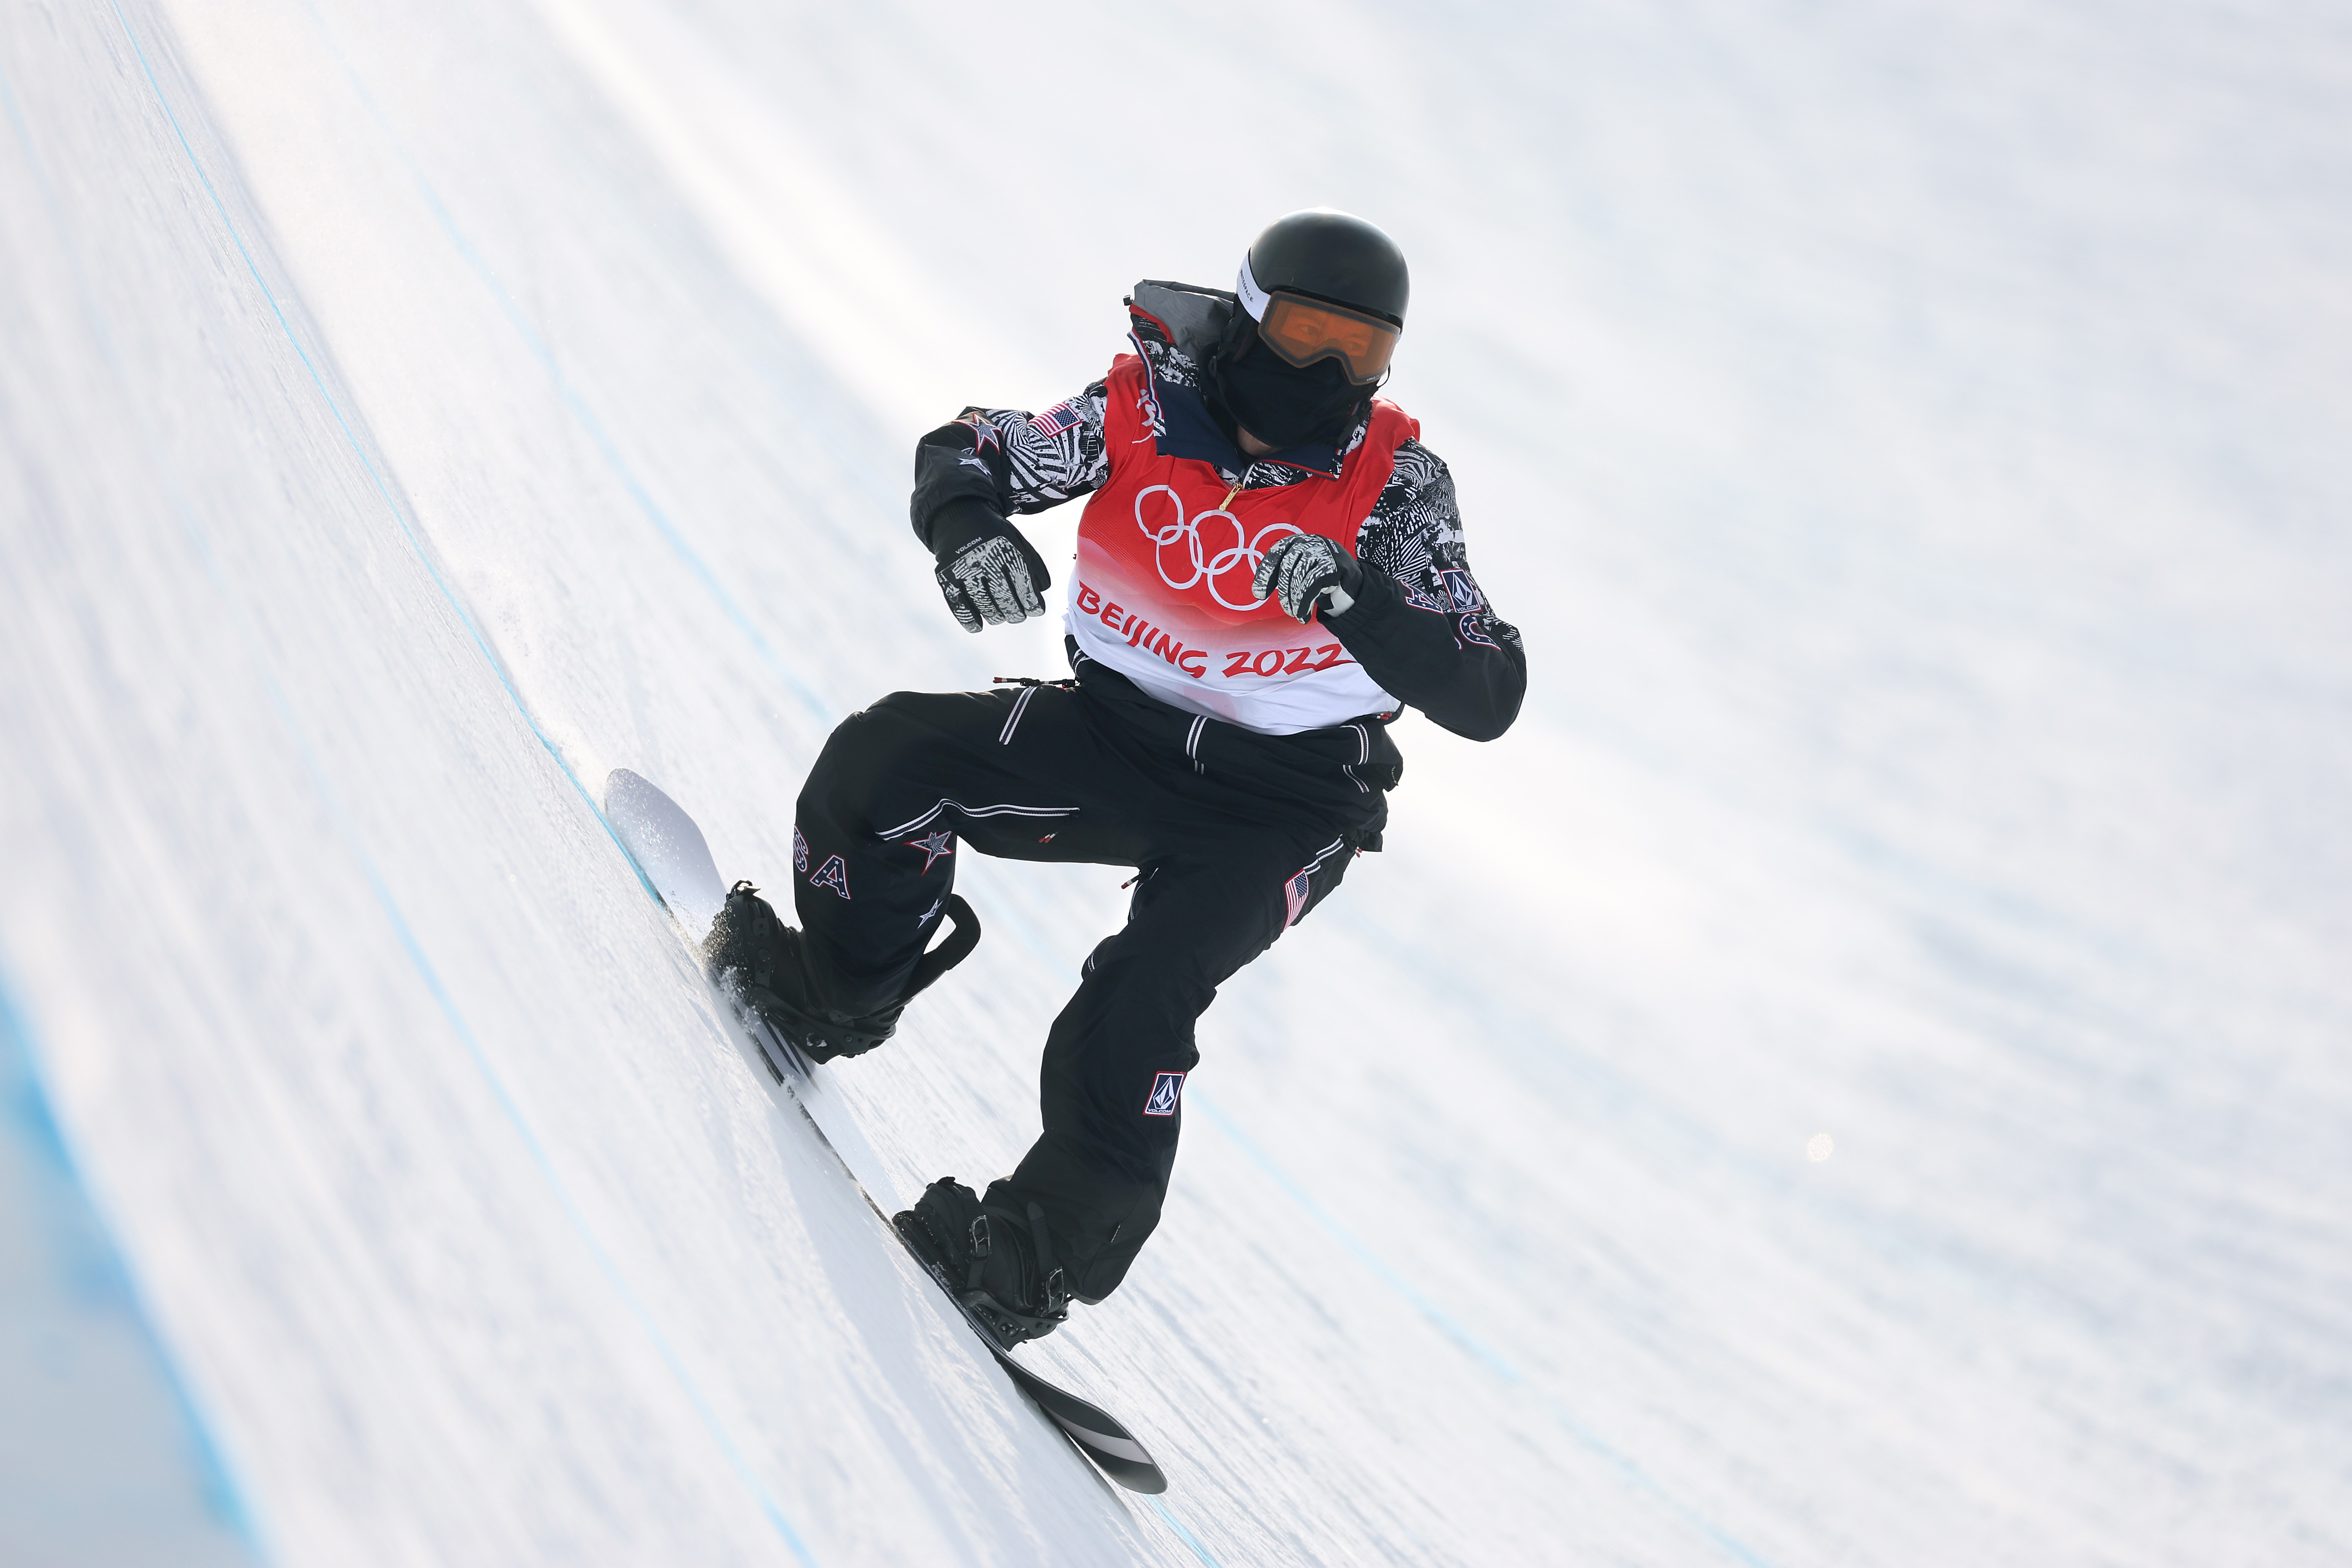 Shaun White Cries After Final Olympics Snowboarding Run in Beijing